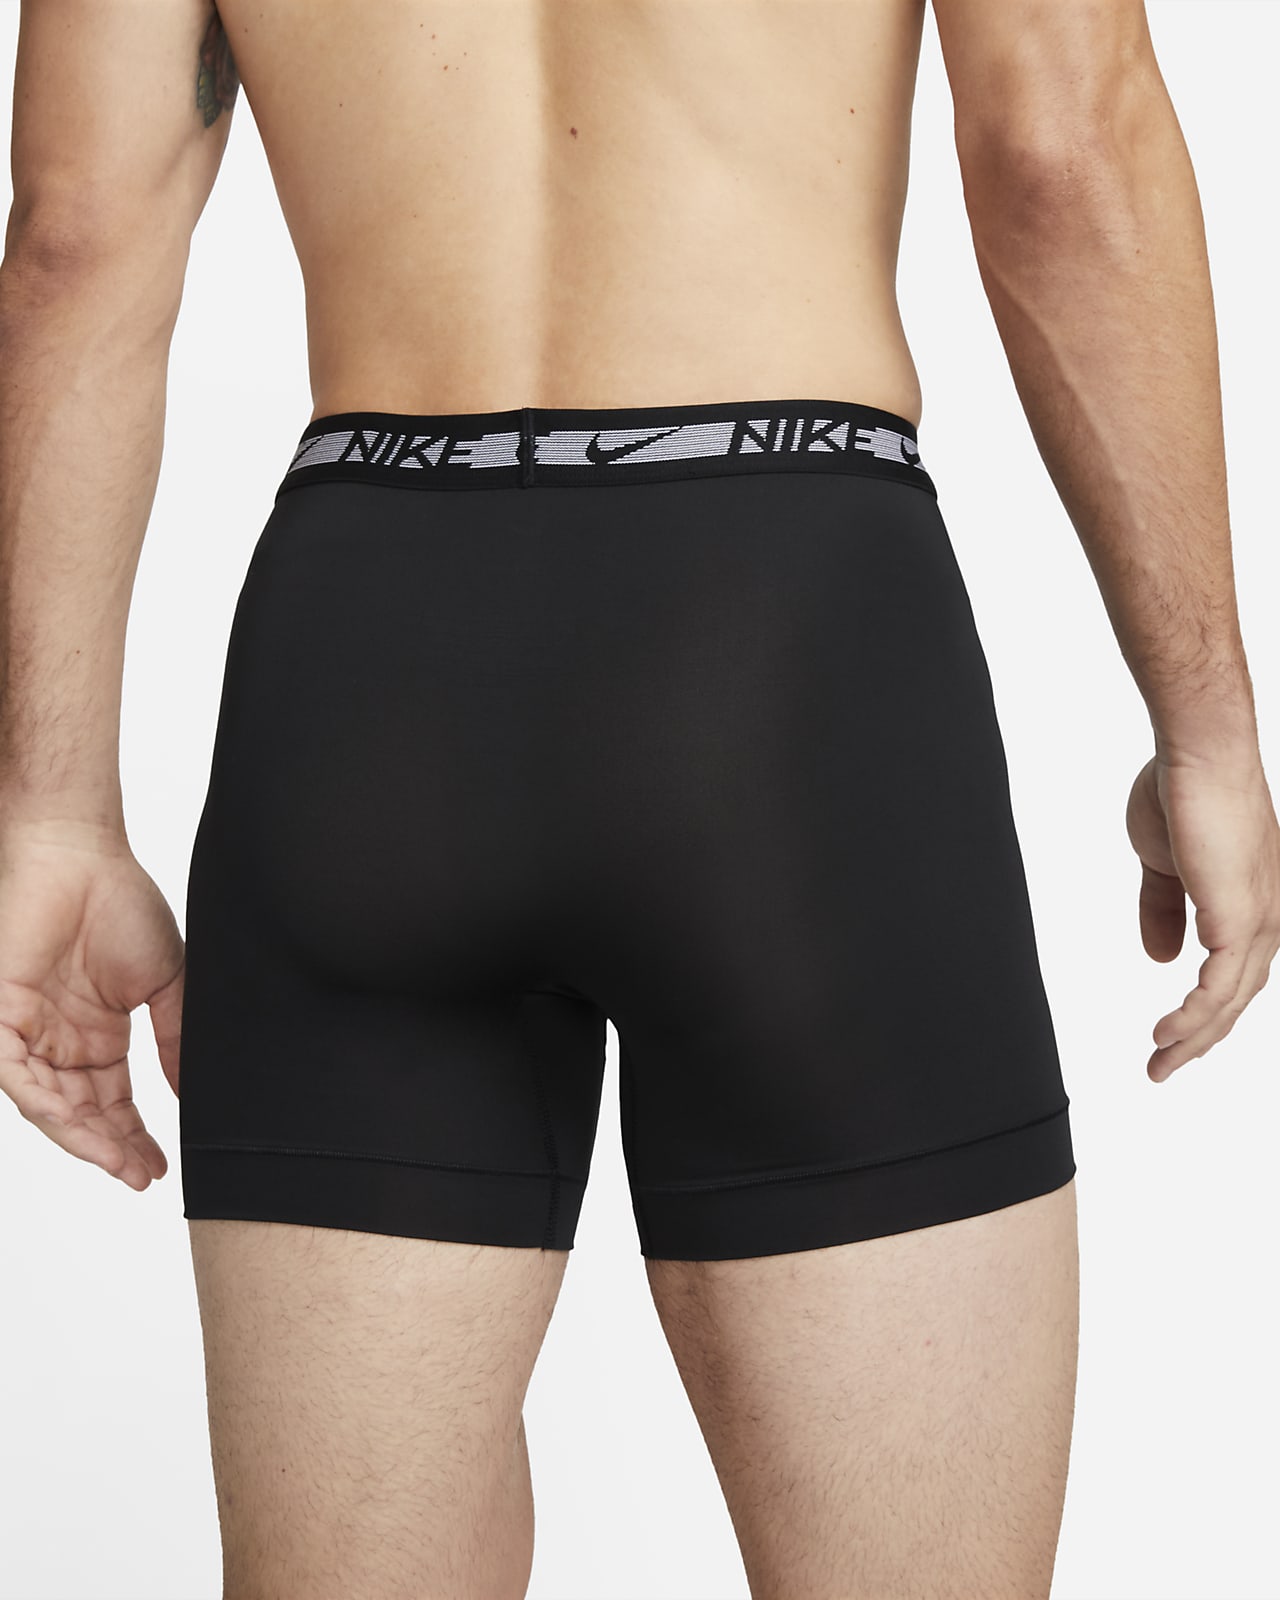 NIKE 3 PACK Men's S Flex Micro Dri-Fit Boxer Briefs Black Underwear NEW